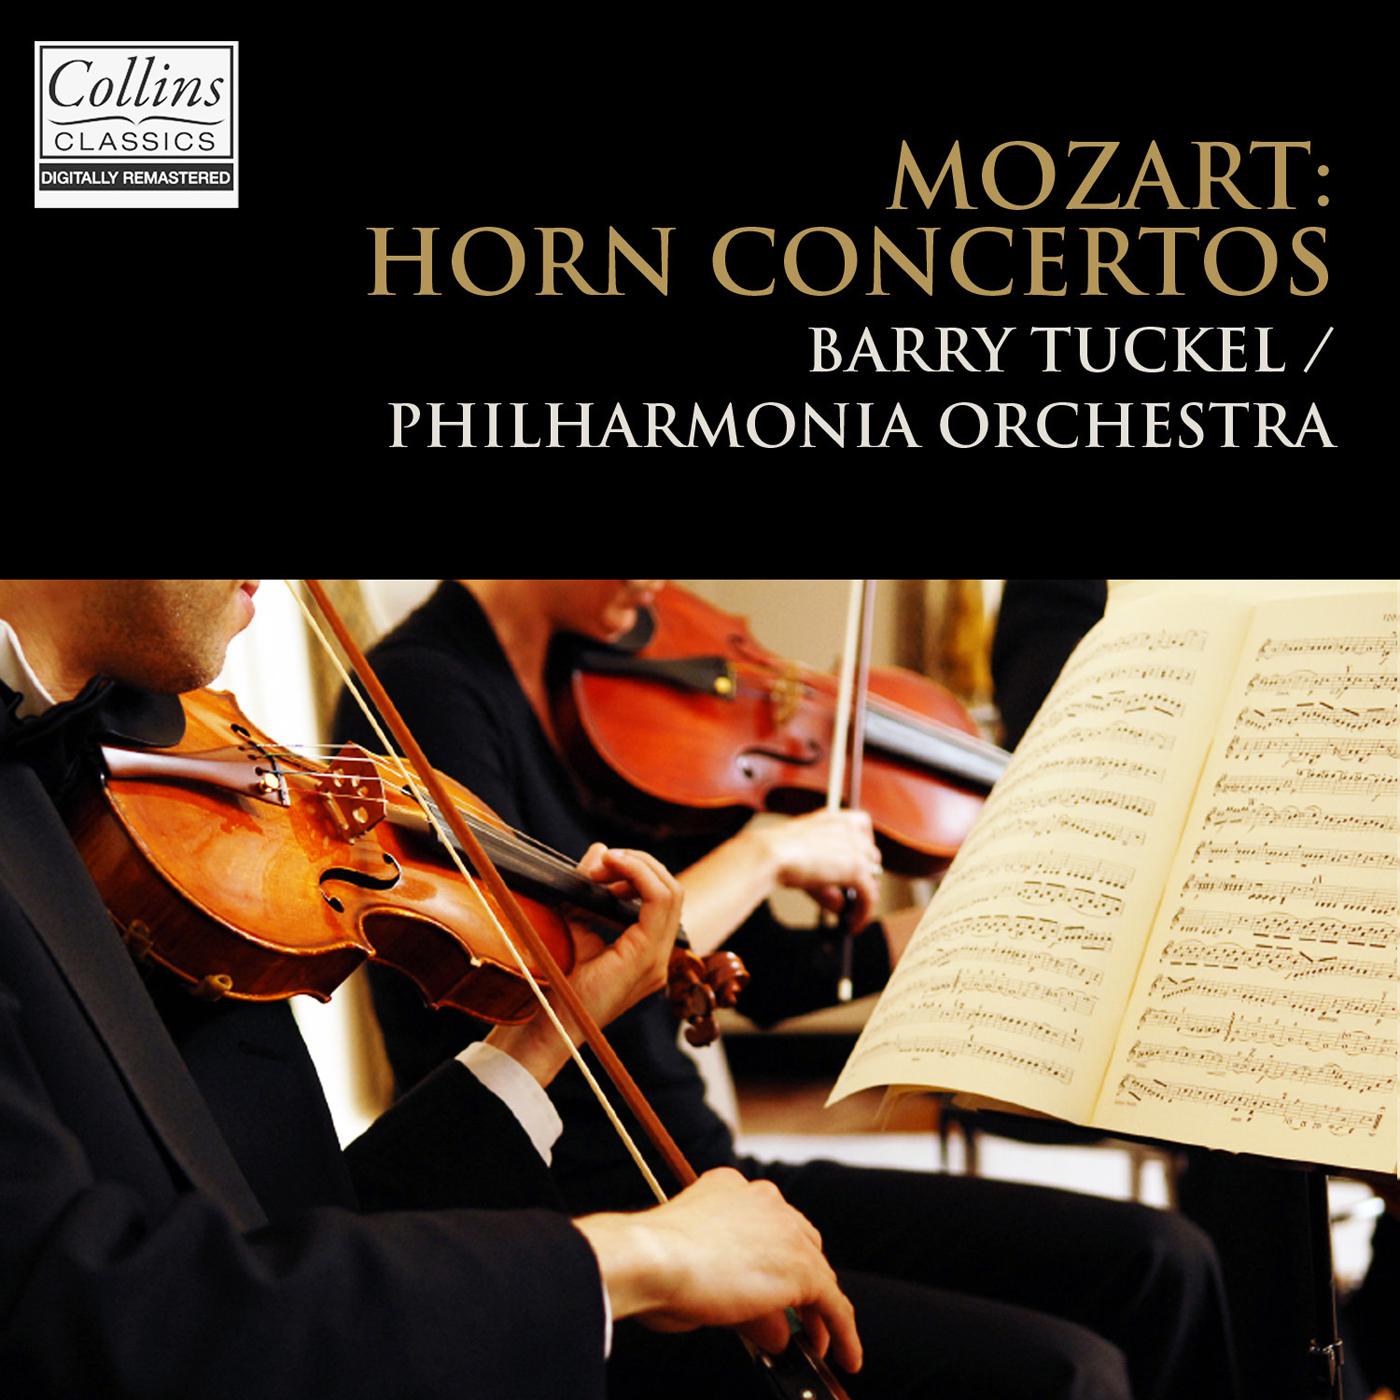 Horn Concerto in E Major, K. 494a: I. Allegro